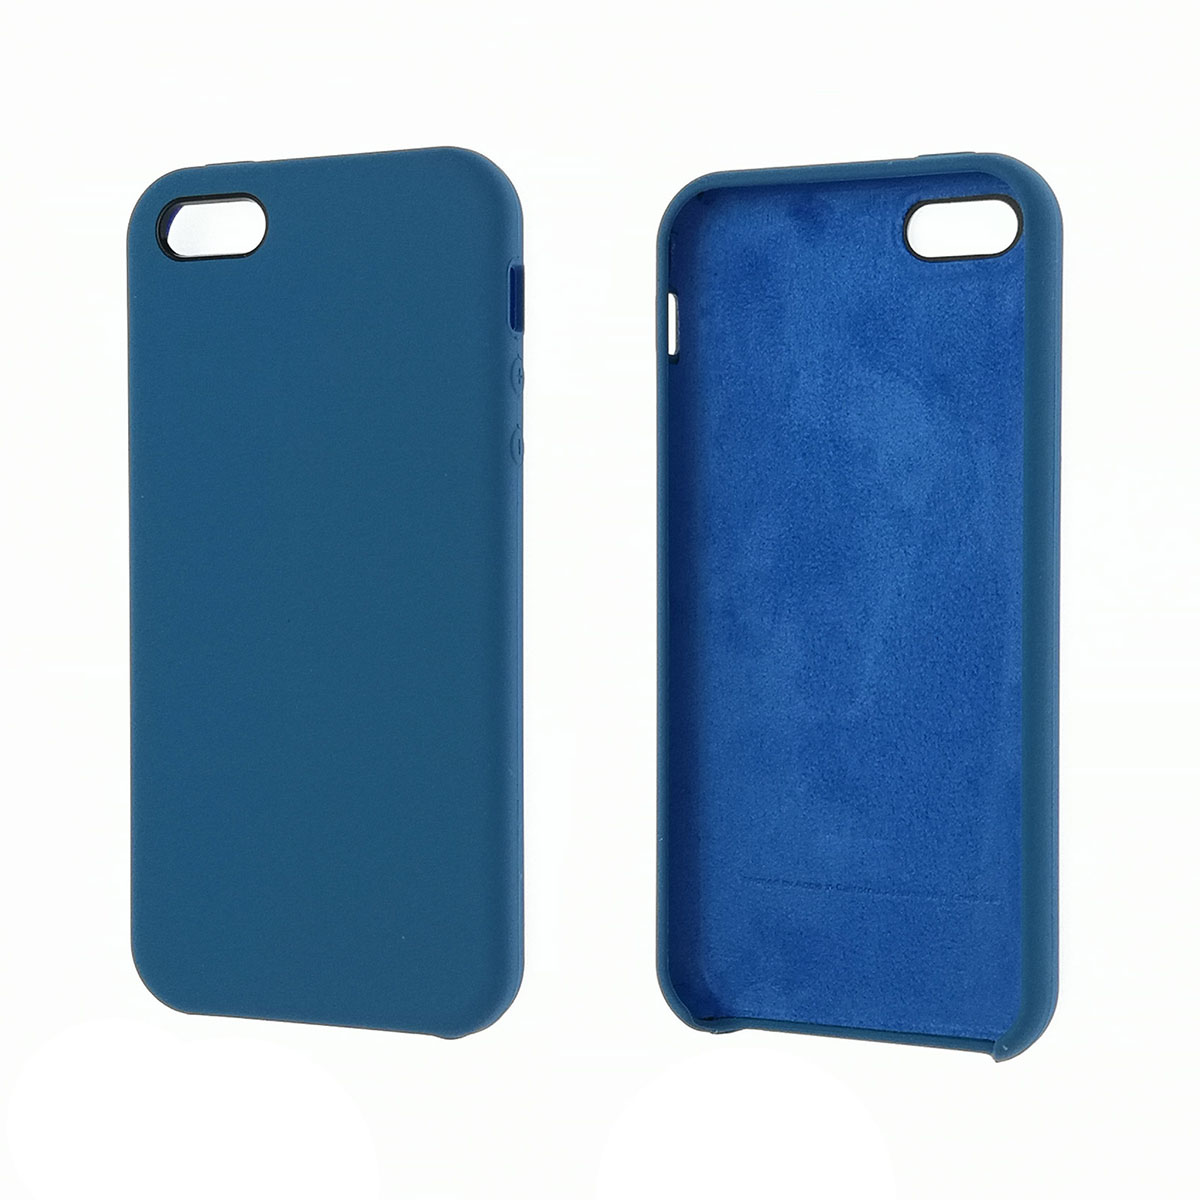 Чехол накладка Silicon Case для APPLE iPhone 5, 5S, SE, силикон, бархат, цвет синий.